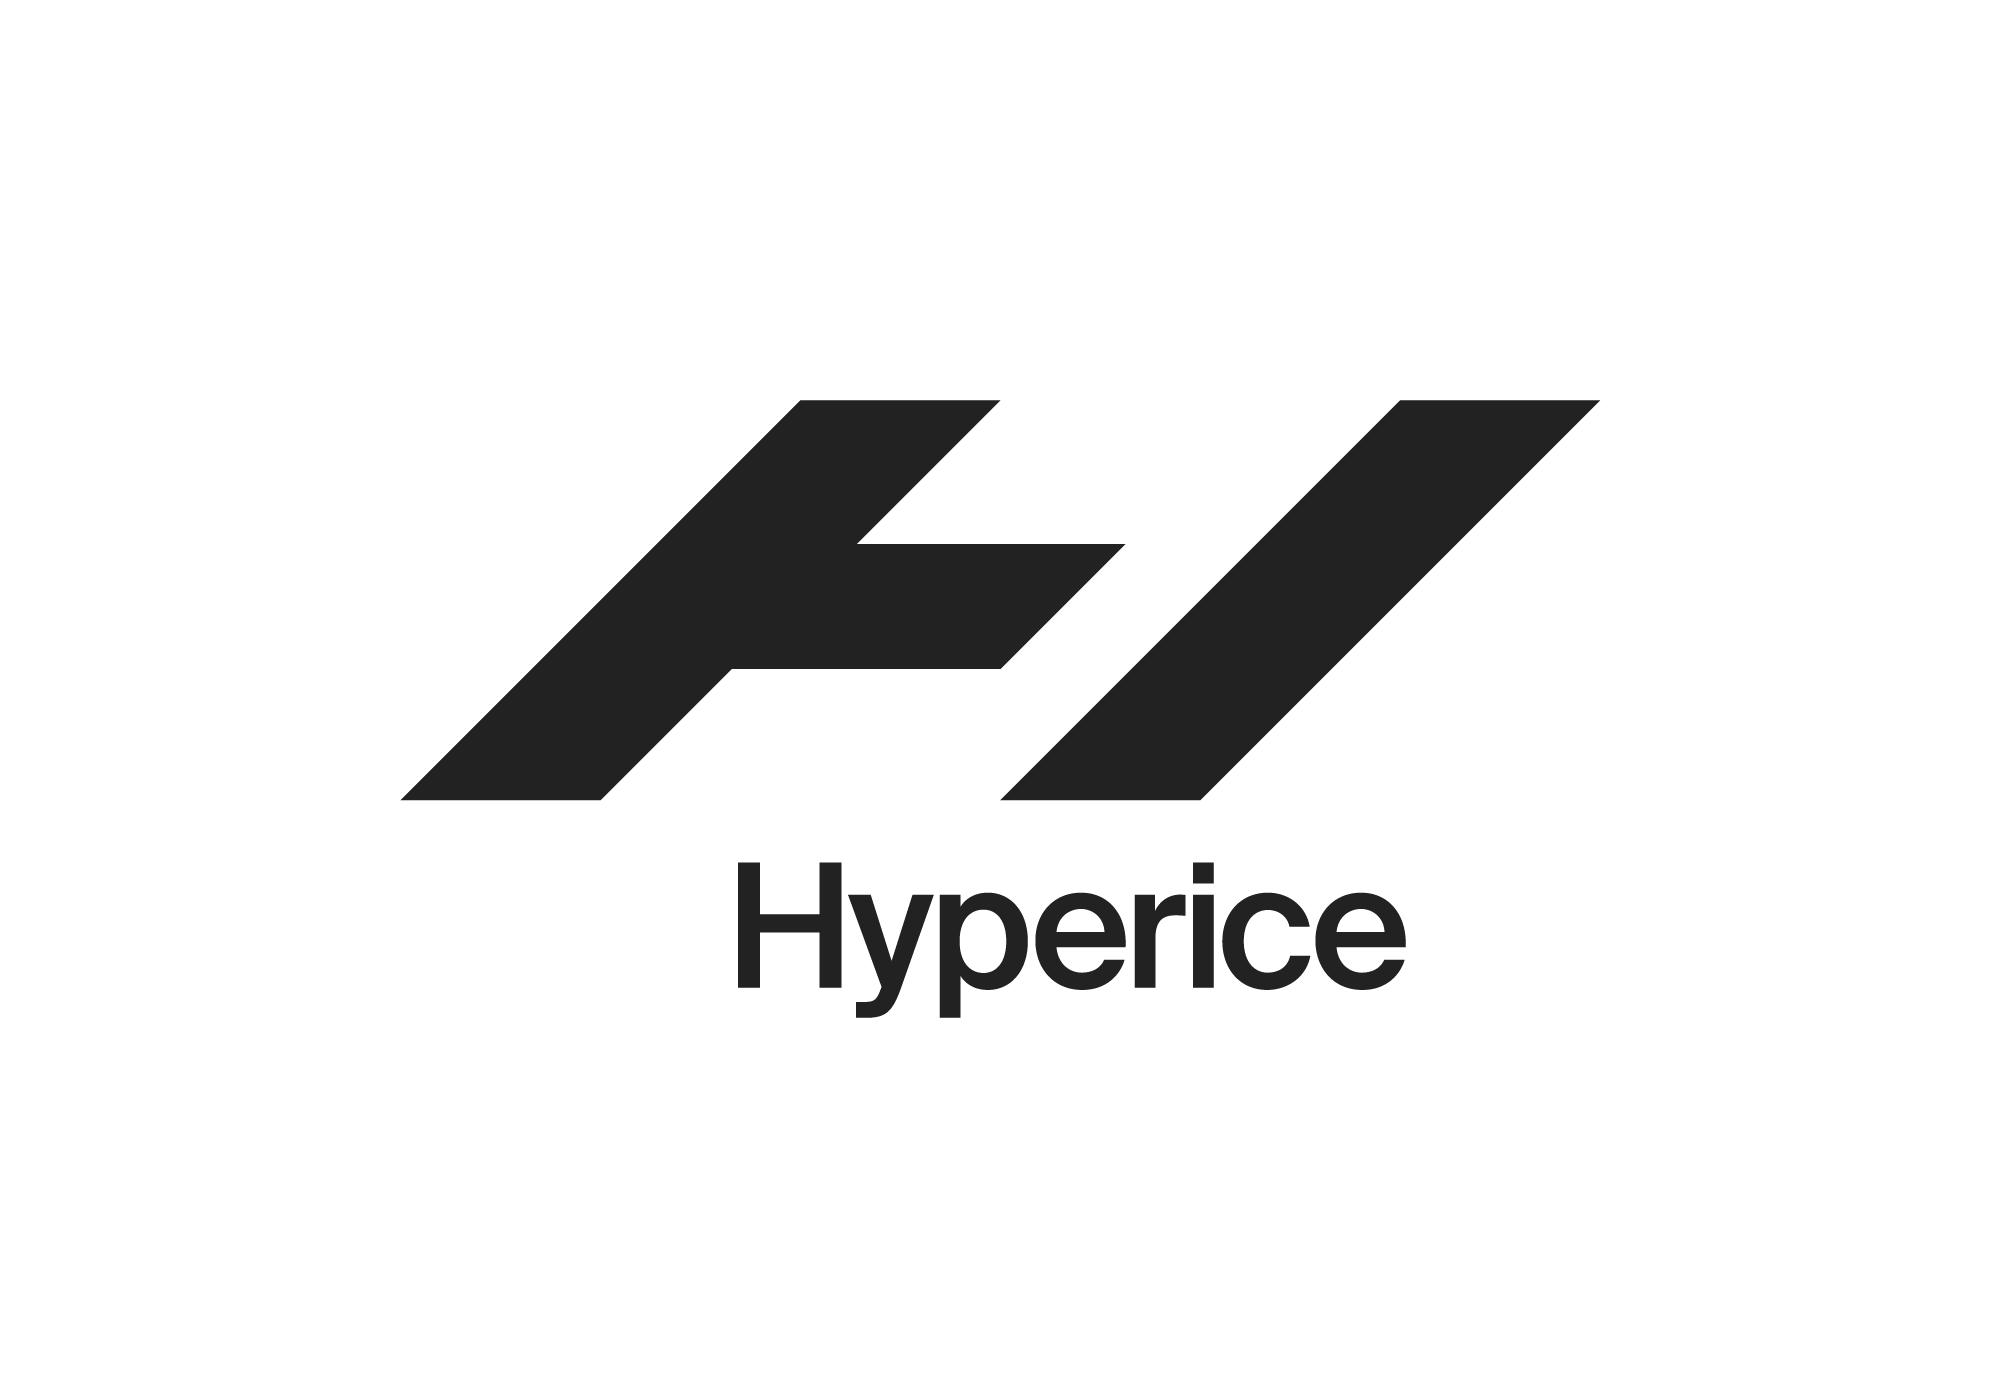 HyperIce logo.png